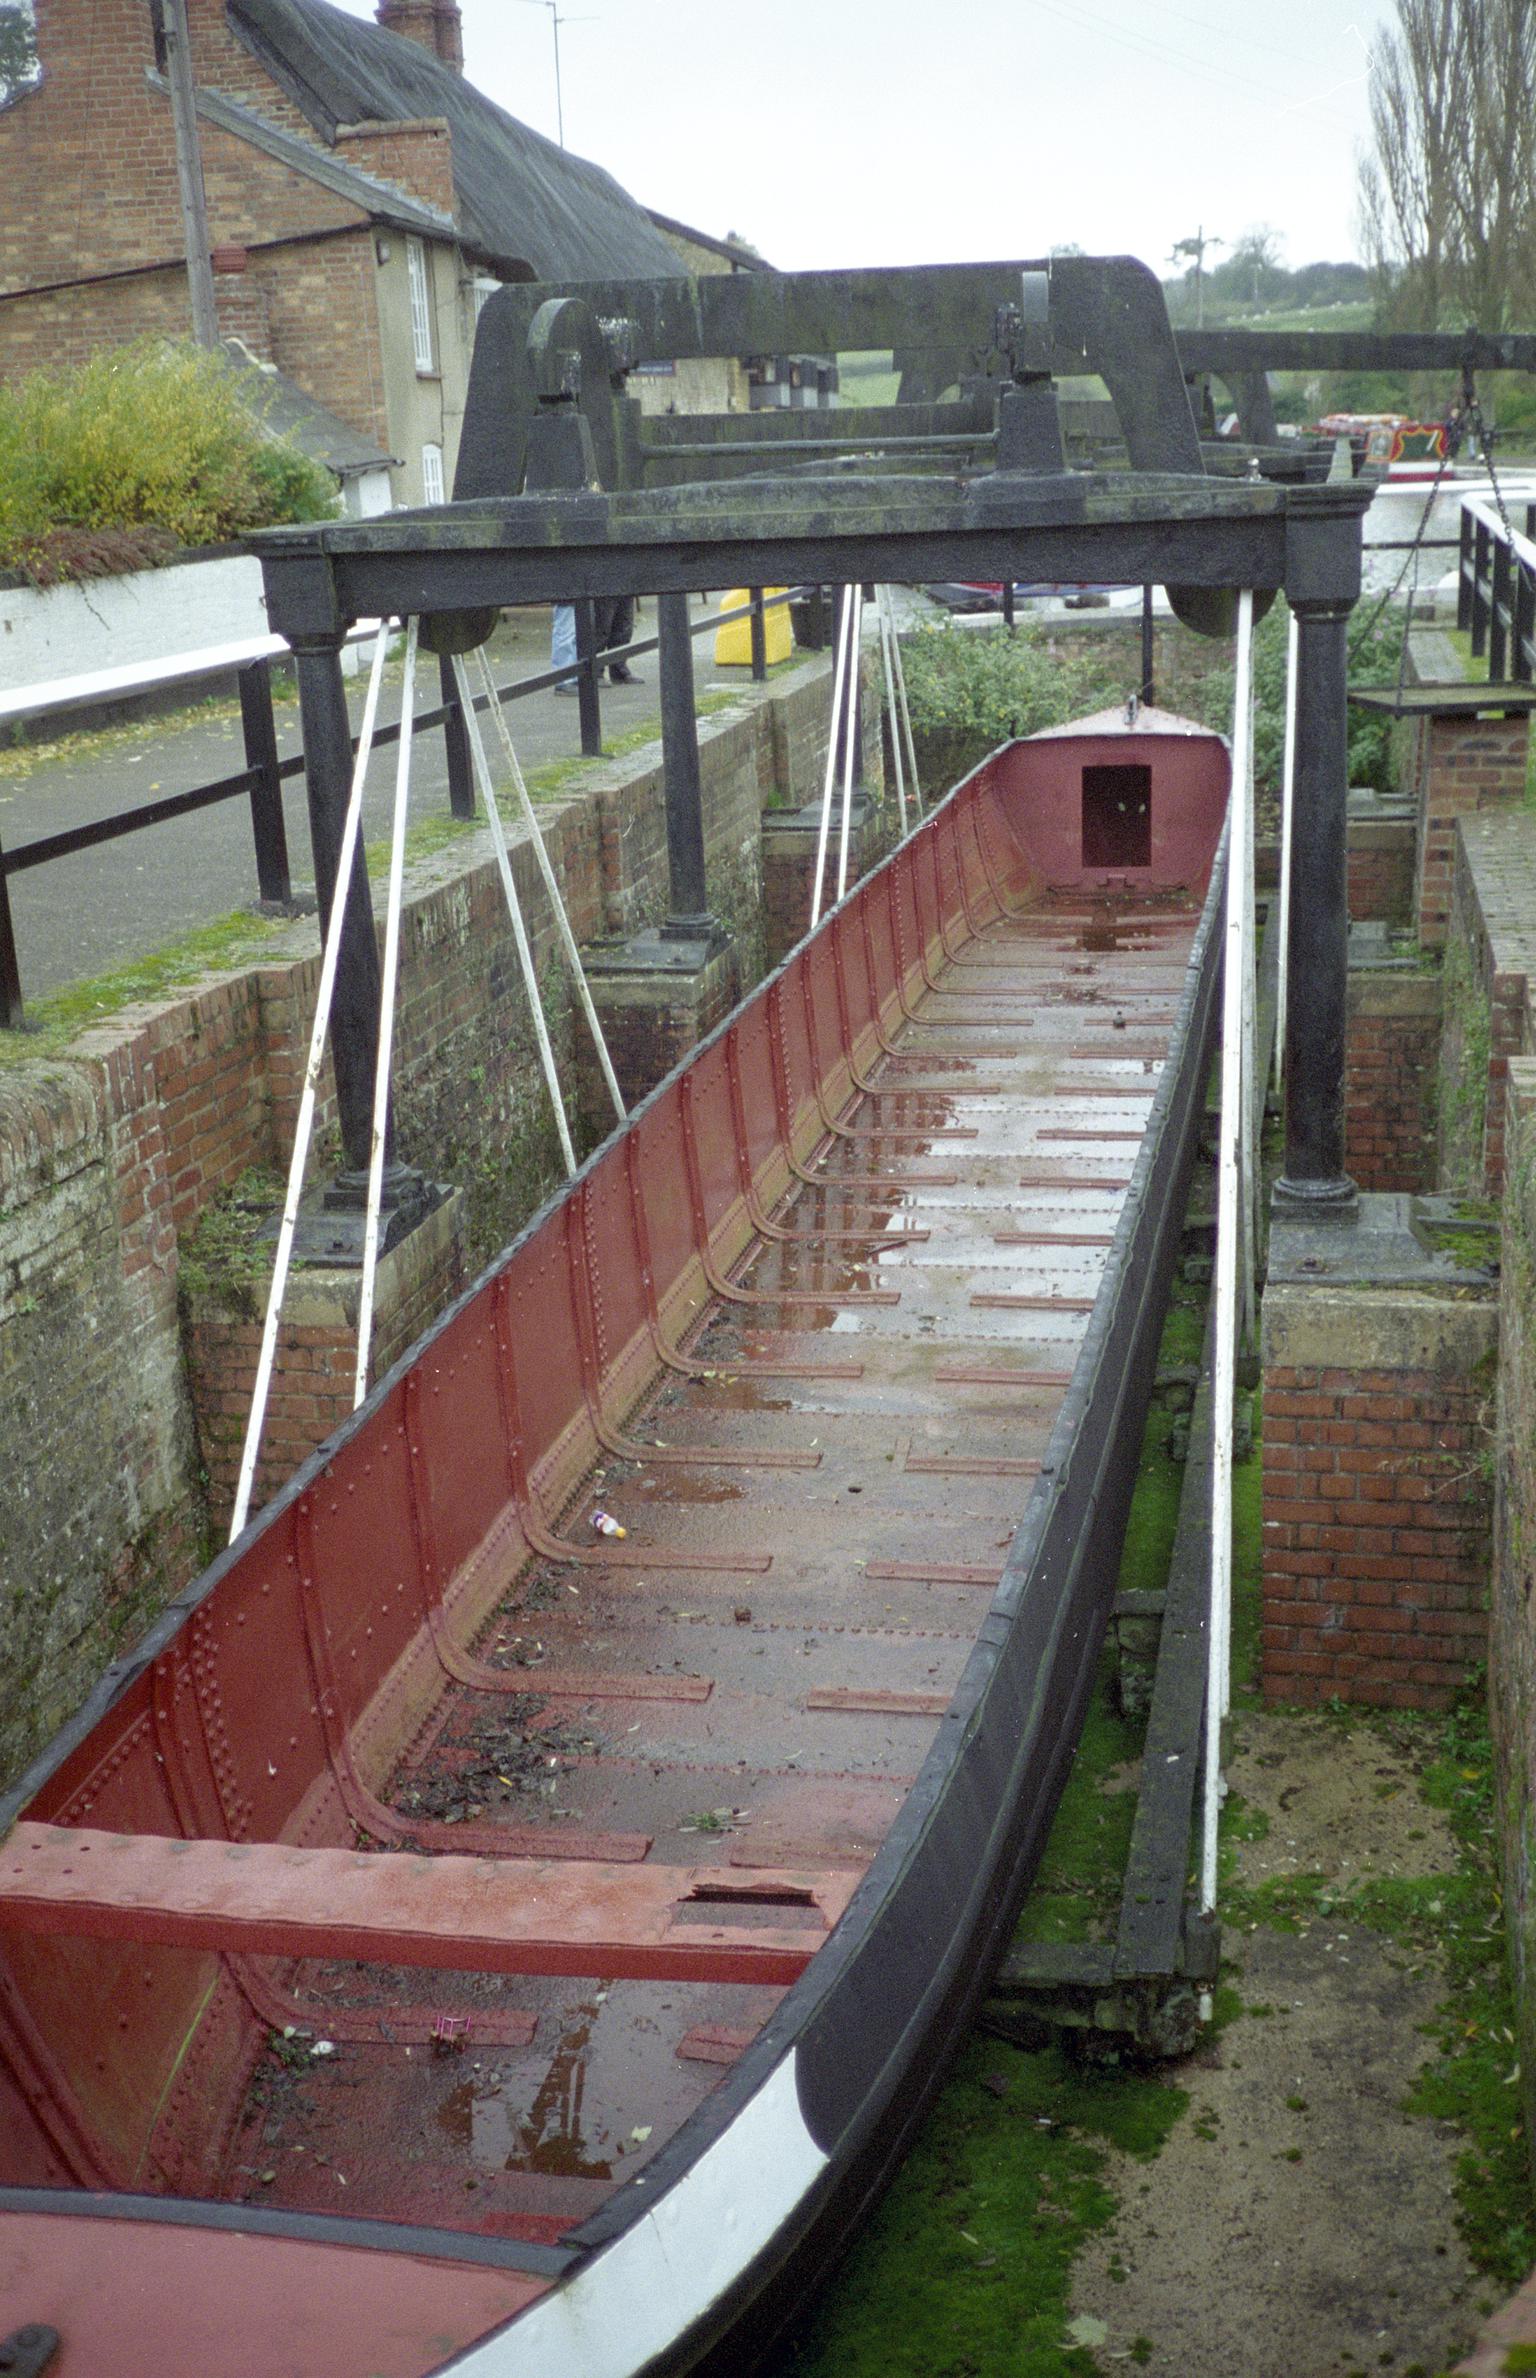 Glamorganshire Canal boat weighing machine, negative